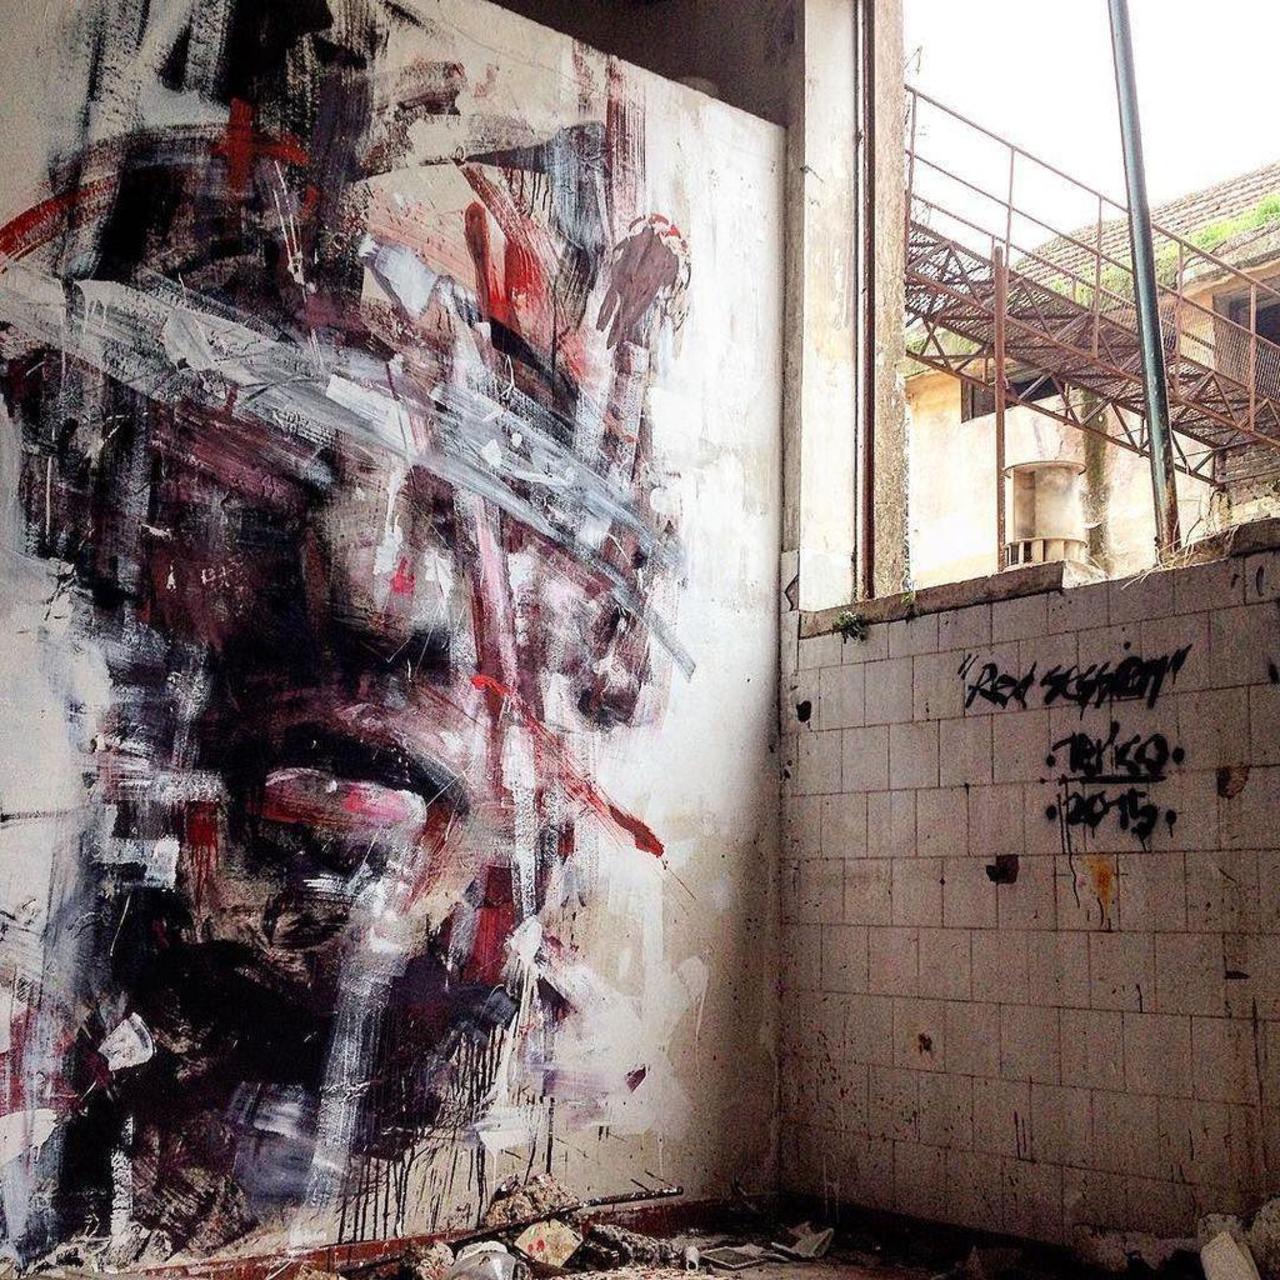 Red session by @jerico_de_cristo 
#abandoned #abandonedplaces #streetart #art #ubanart #painting #wall #graffiti #s… http://t.co/DloJglbcKy